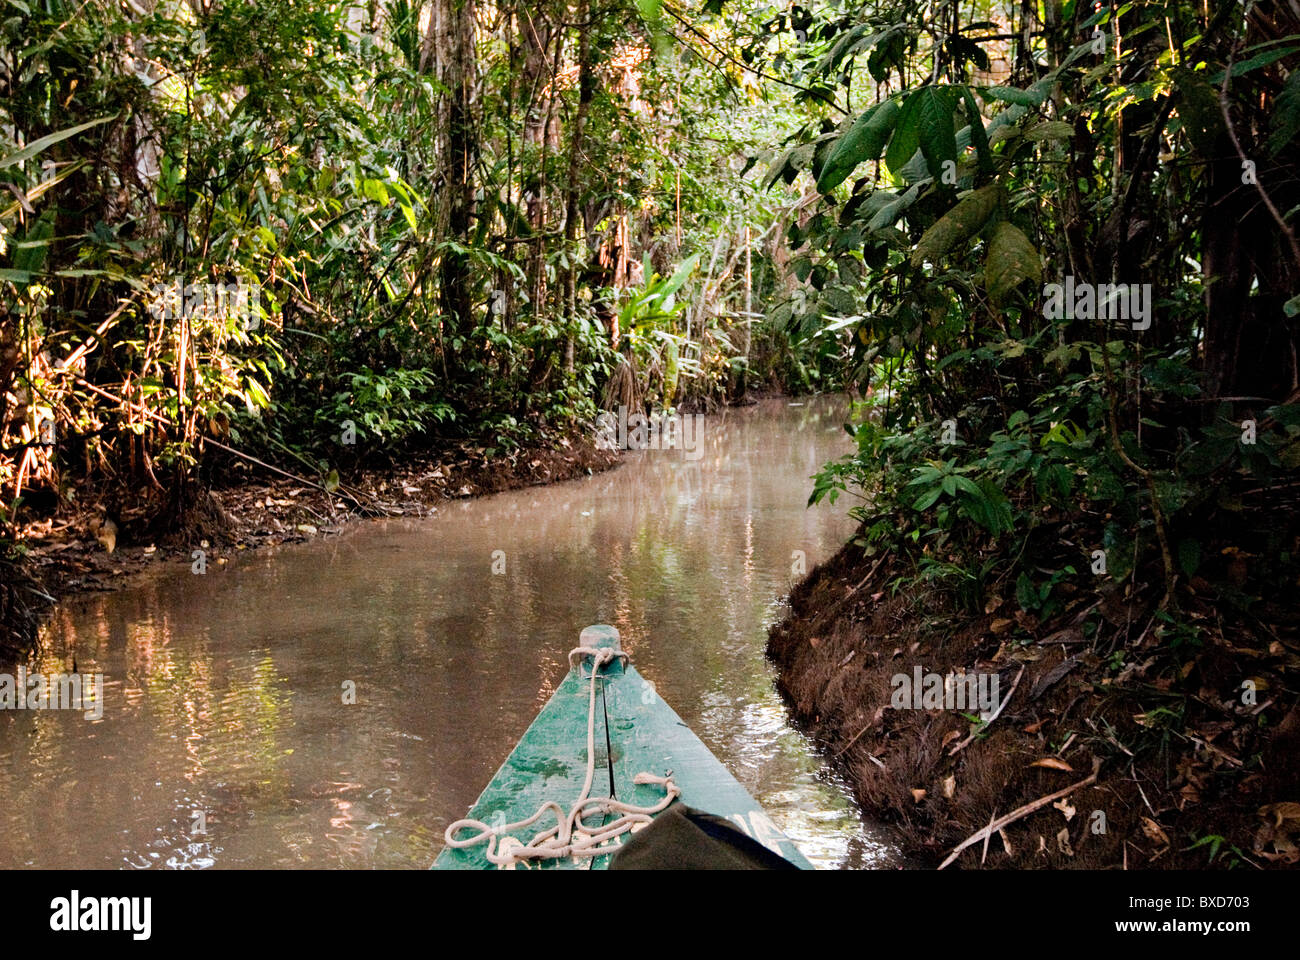 Amazon Rainforest, Puerto Maldanado, Peru. Stock Photo